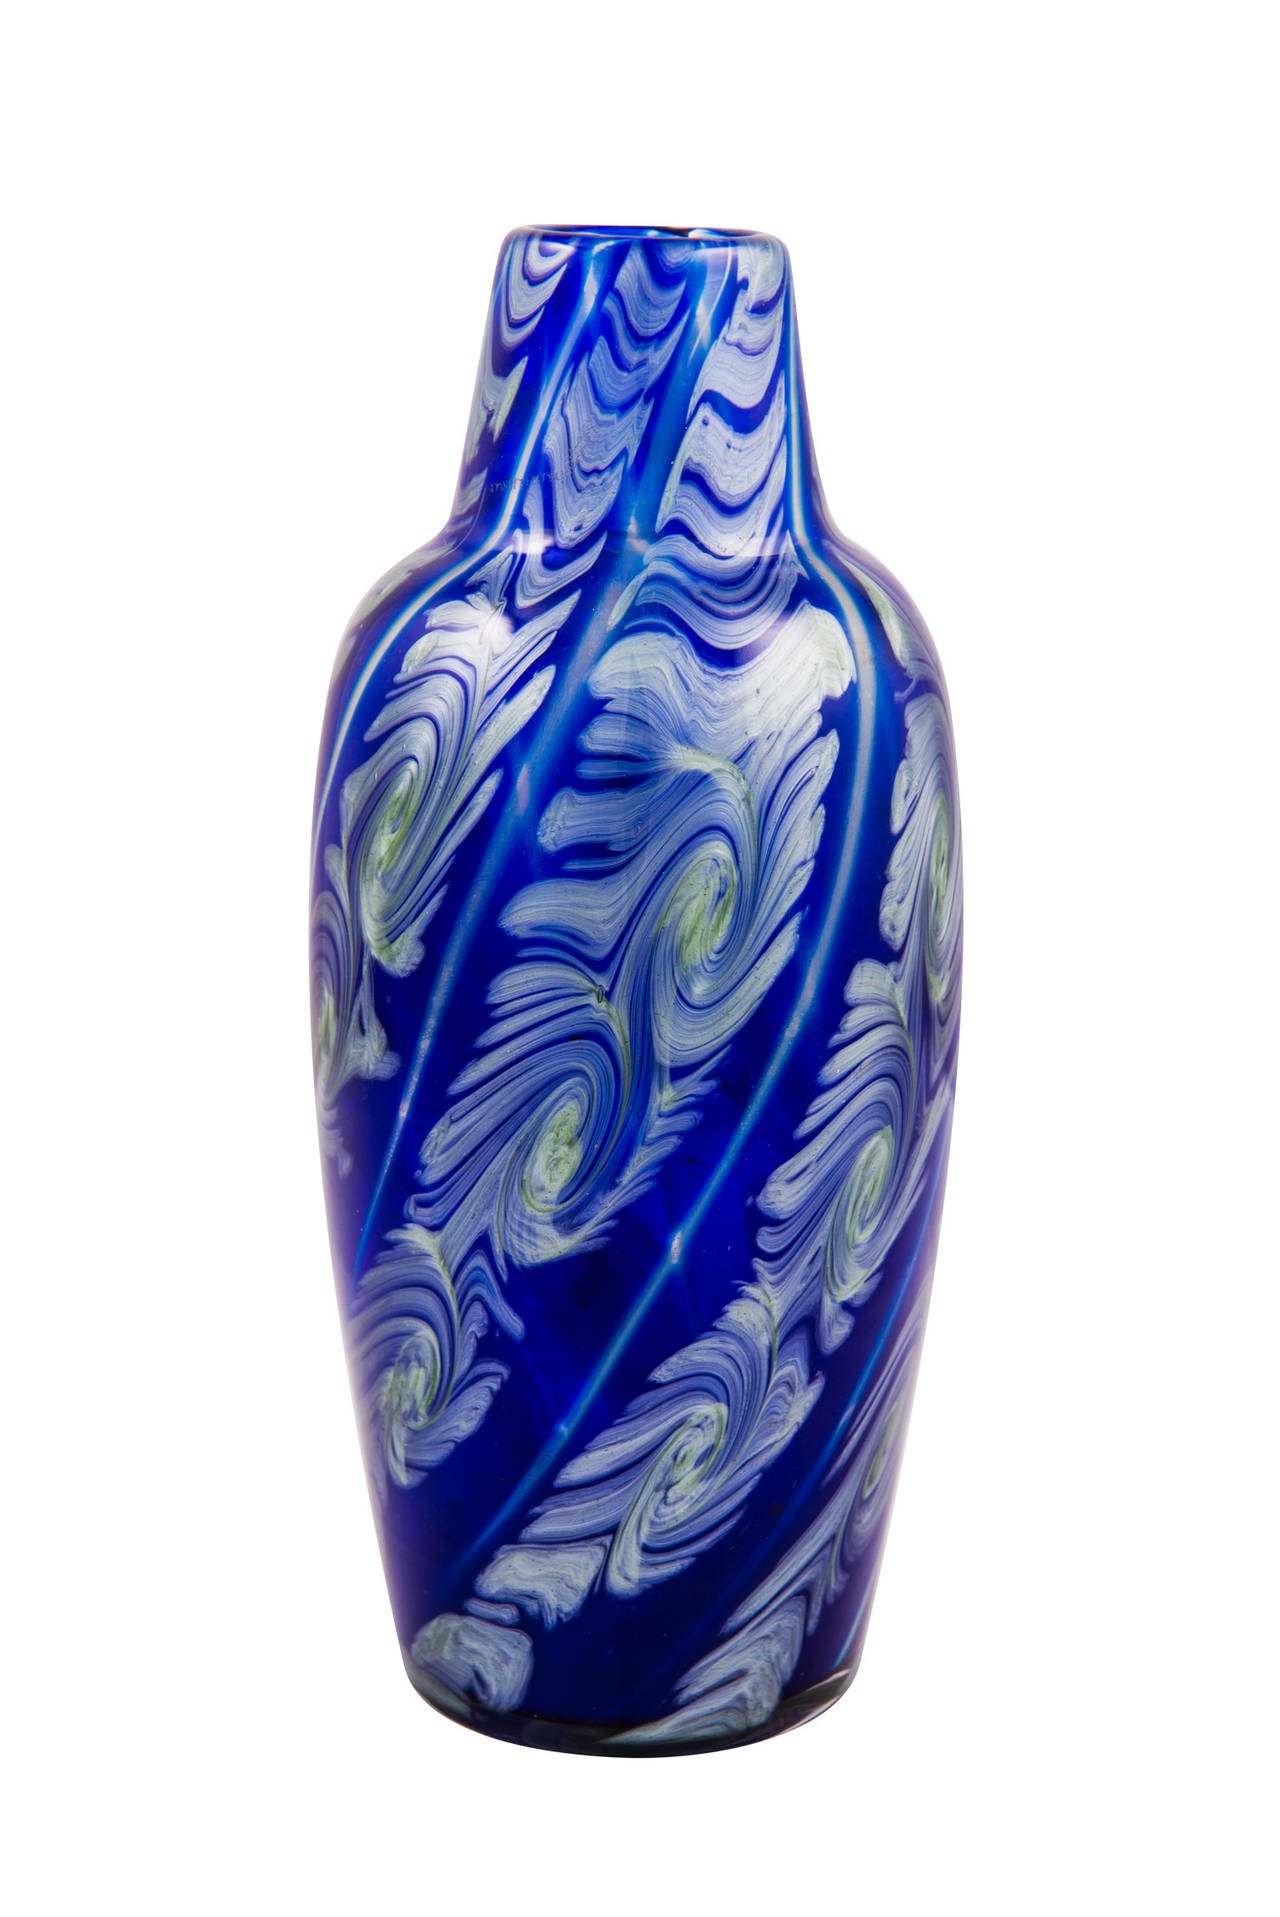 Art Nouveau Loetz Vase Decoration Ausfuhrung 118 in Blue by Franz Hofstoetter, circa 1911